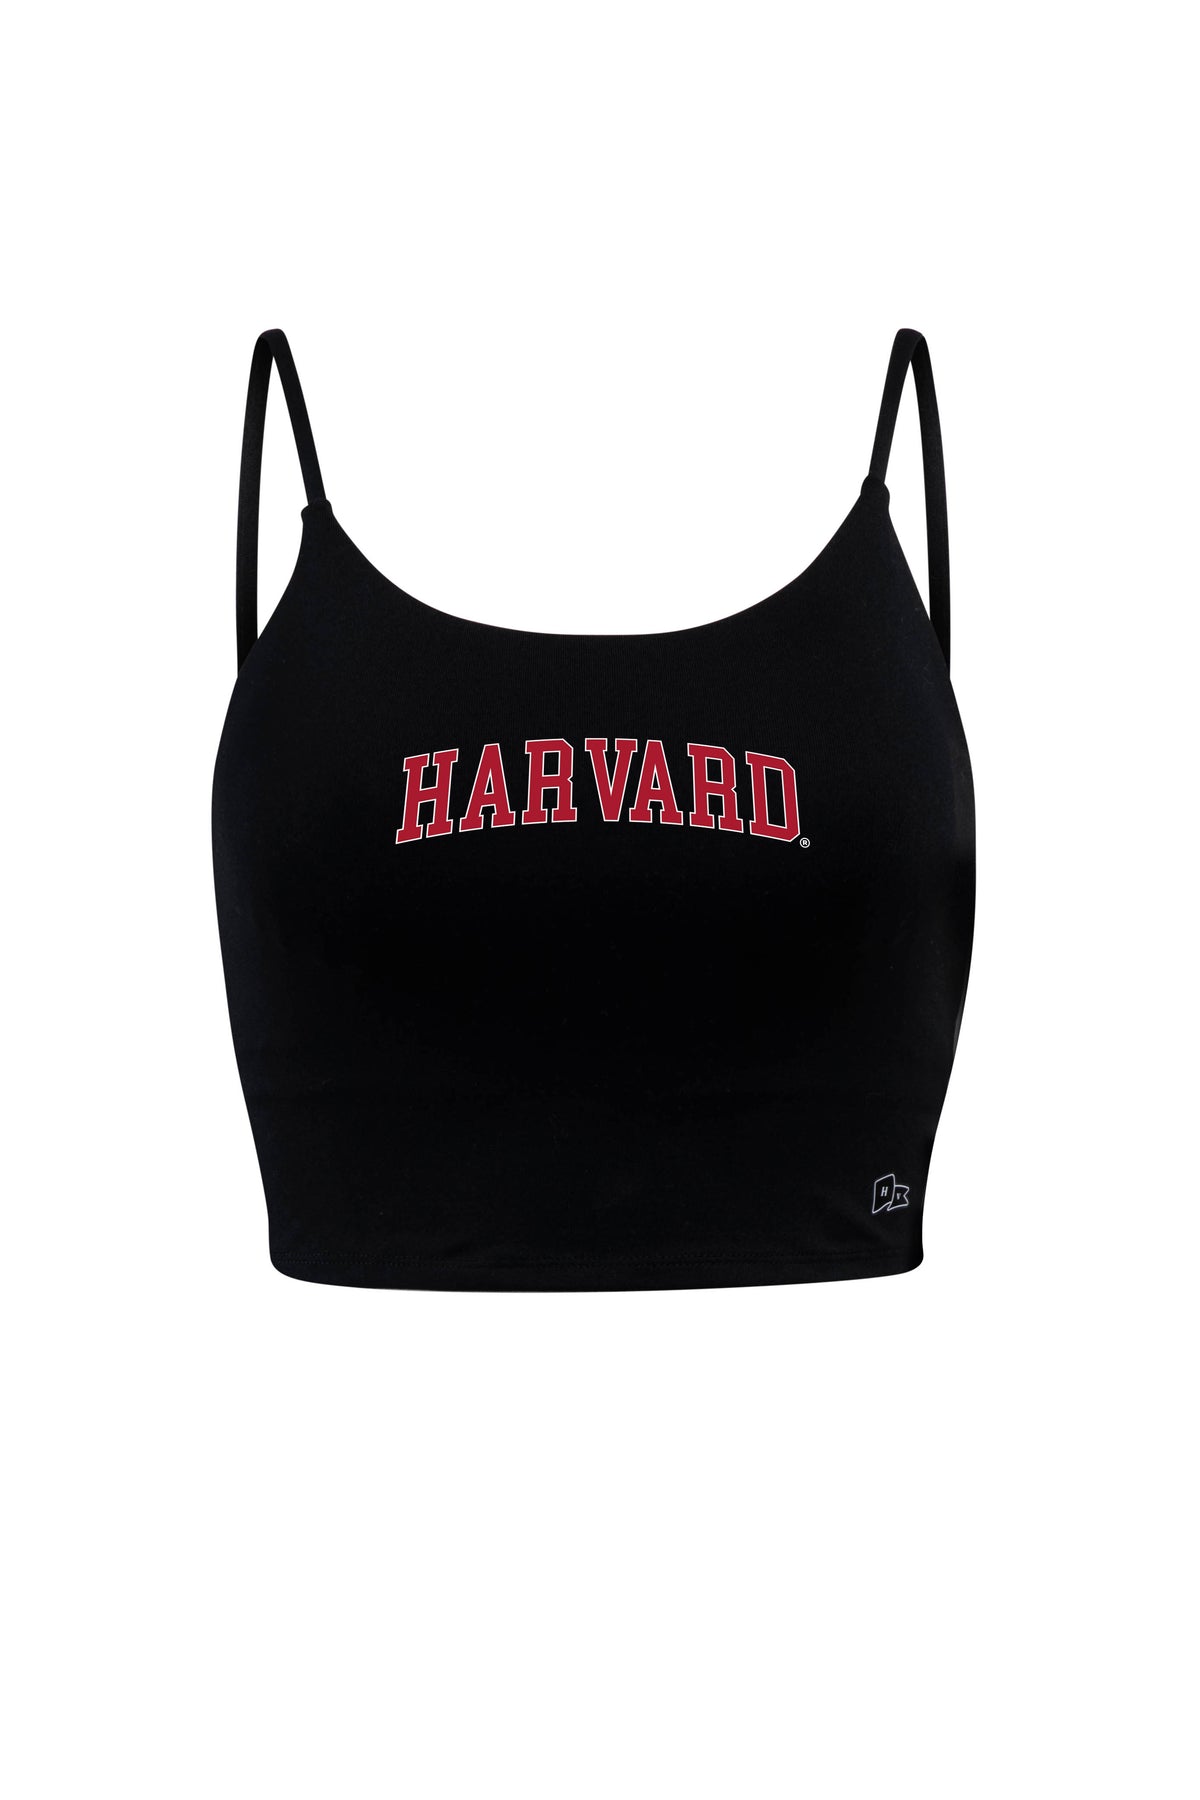 Harvard University Bra Tank Top